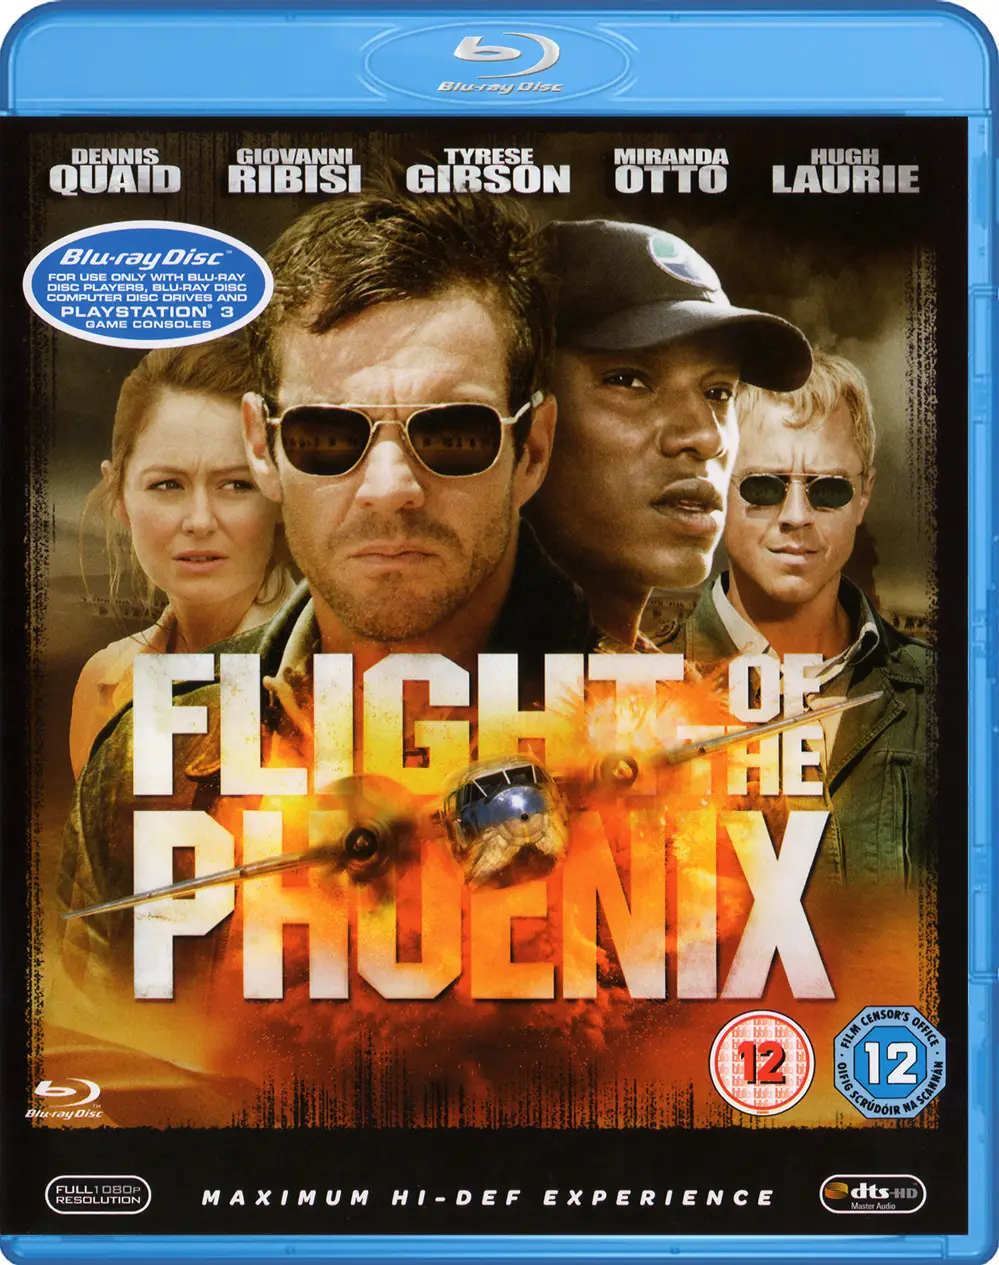 2004 Flight Of The Phoenix